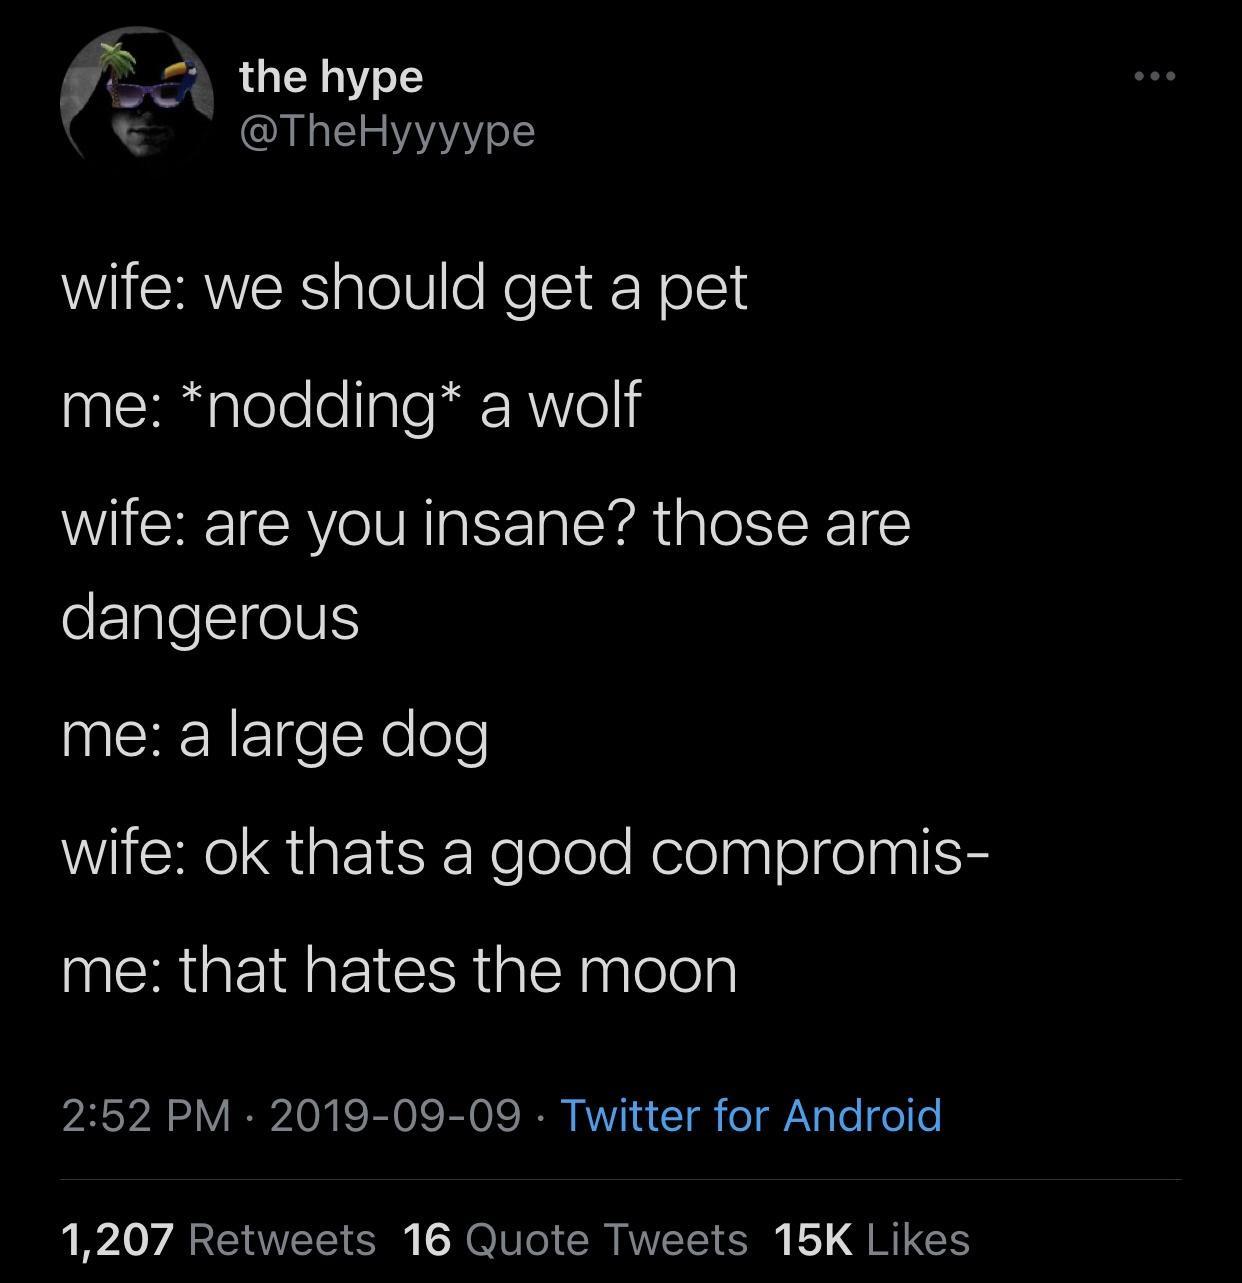 i wonder what kind of large dog hates the moon